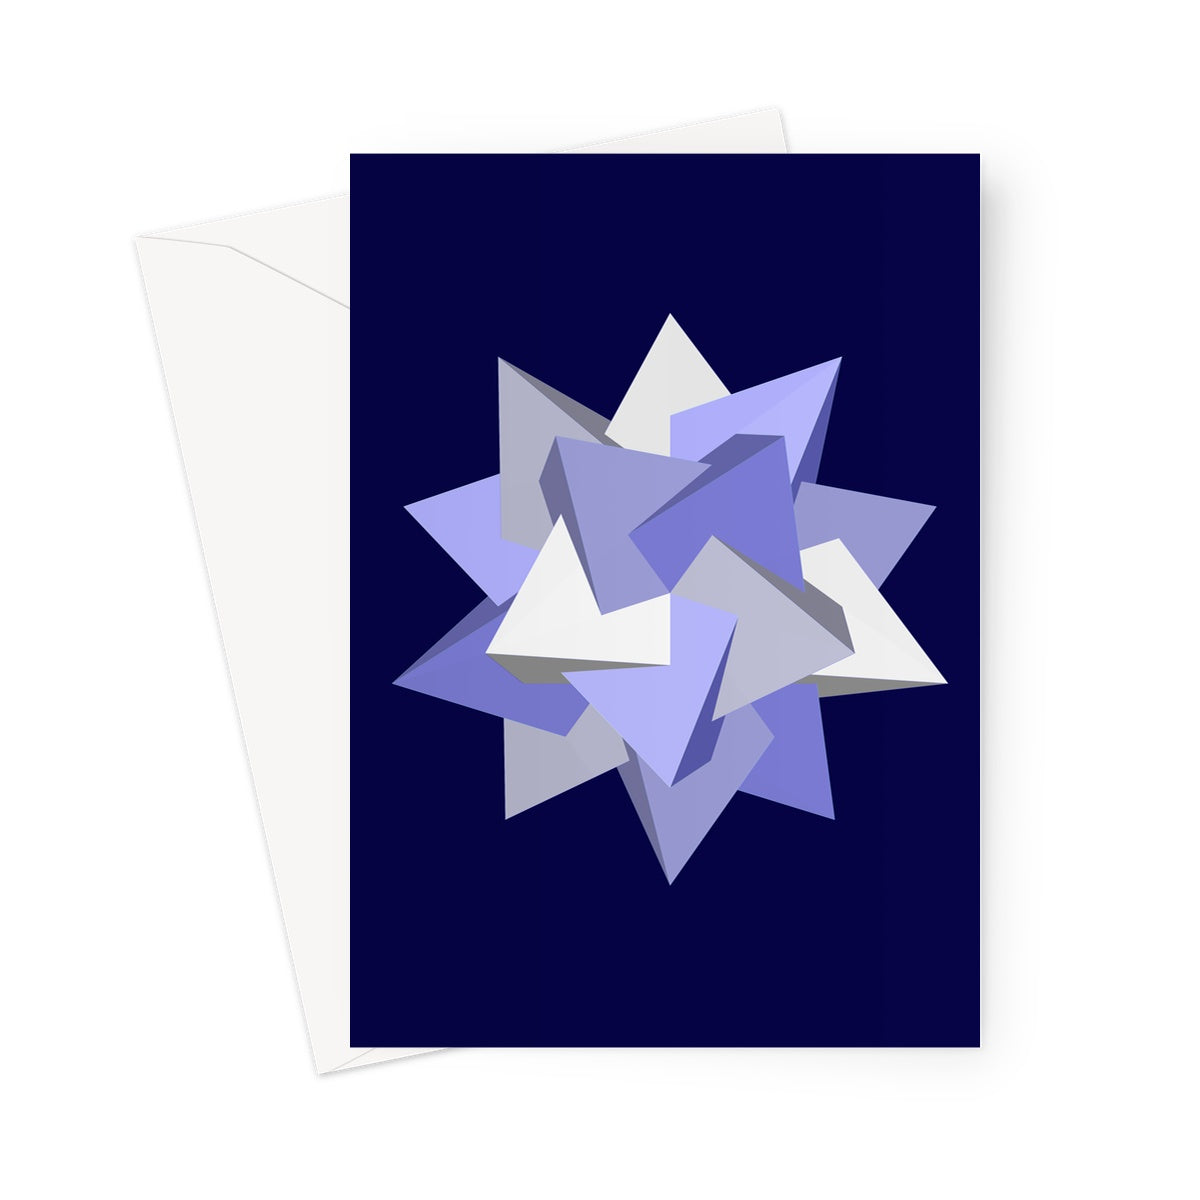 Five Tetrahedra, Winter Greeting Card